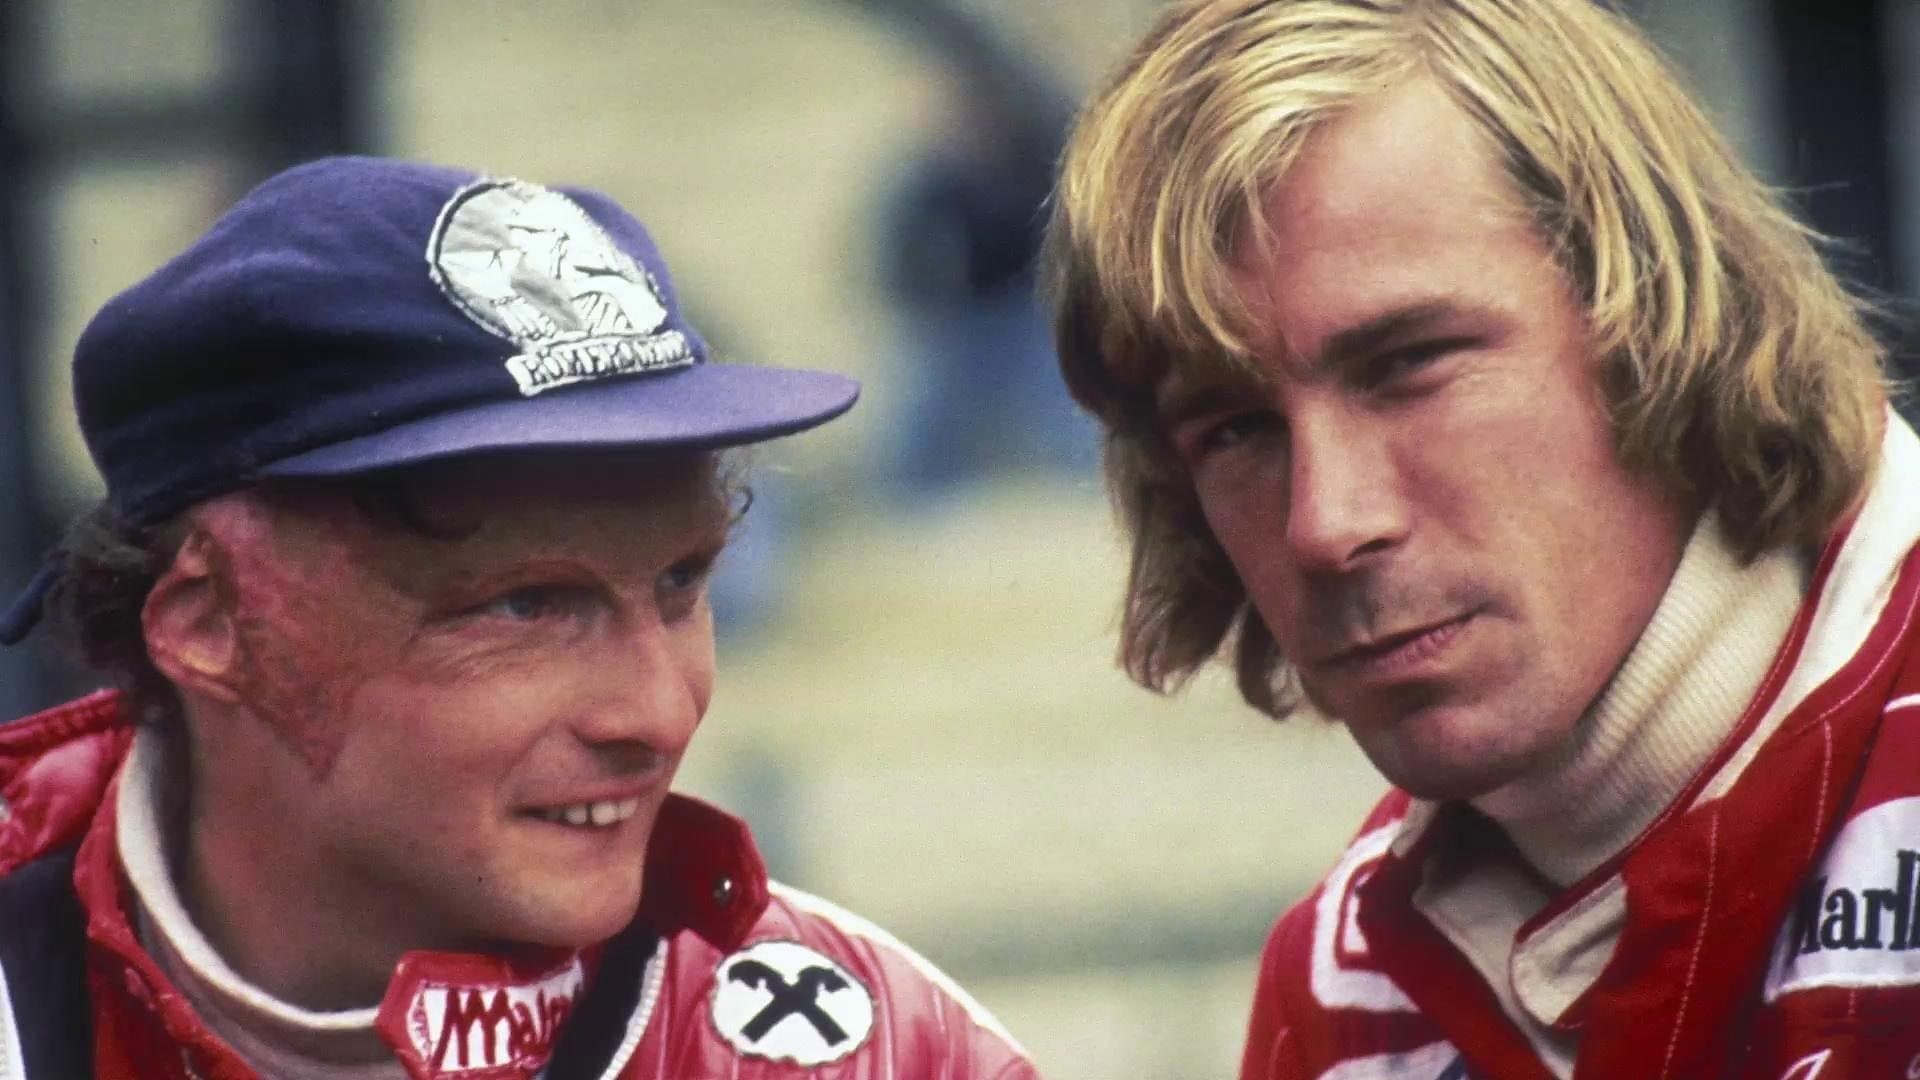 Hunt vs Lauda: F1's Greatest Racing Rivals background